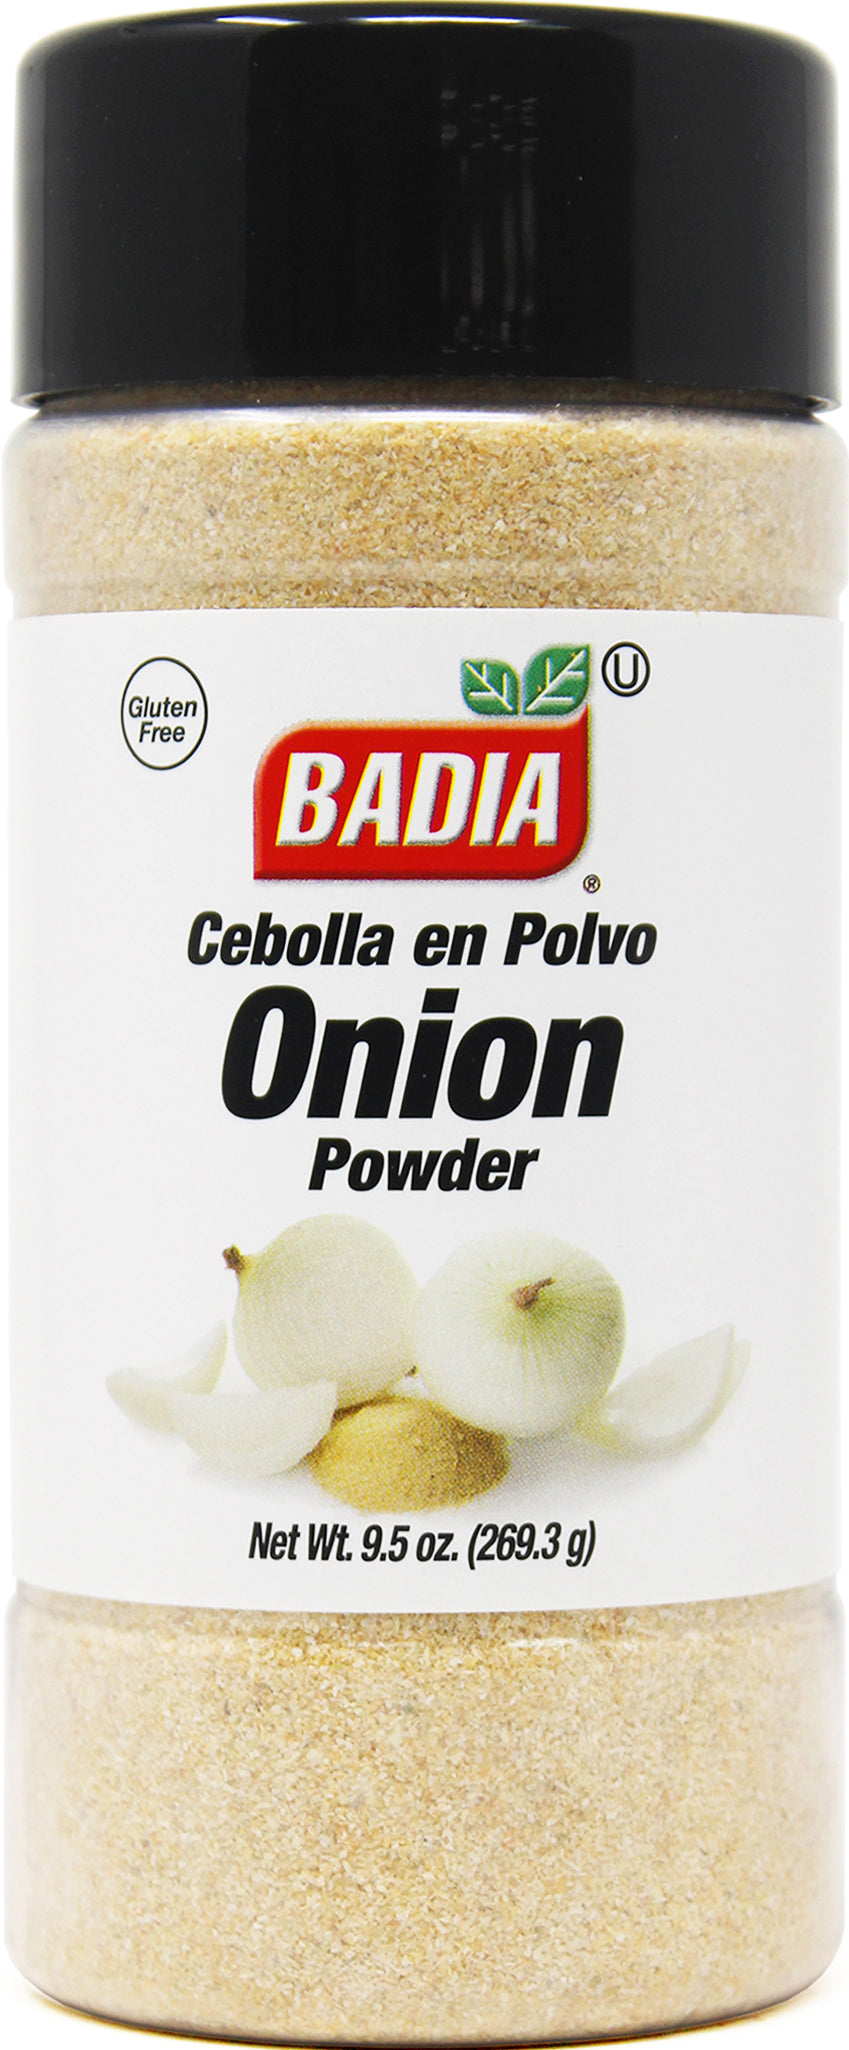 Badia Onion Powder 12/9.5 Oz.